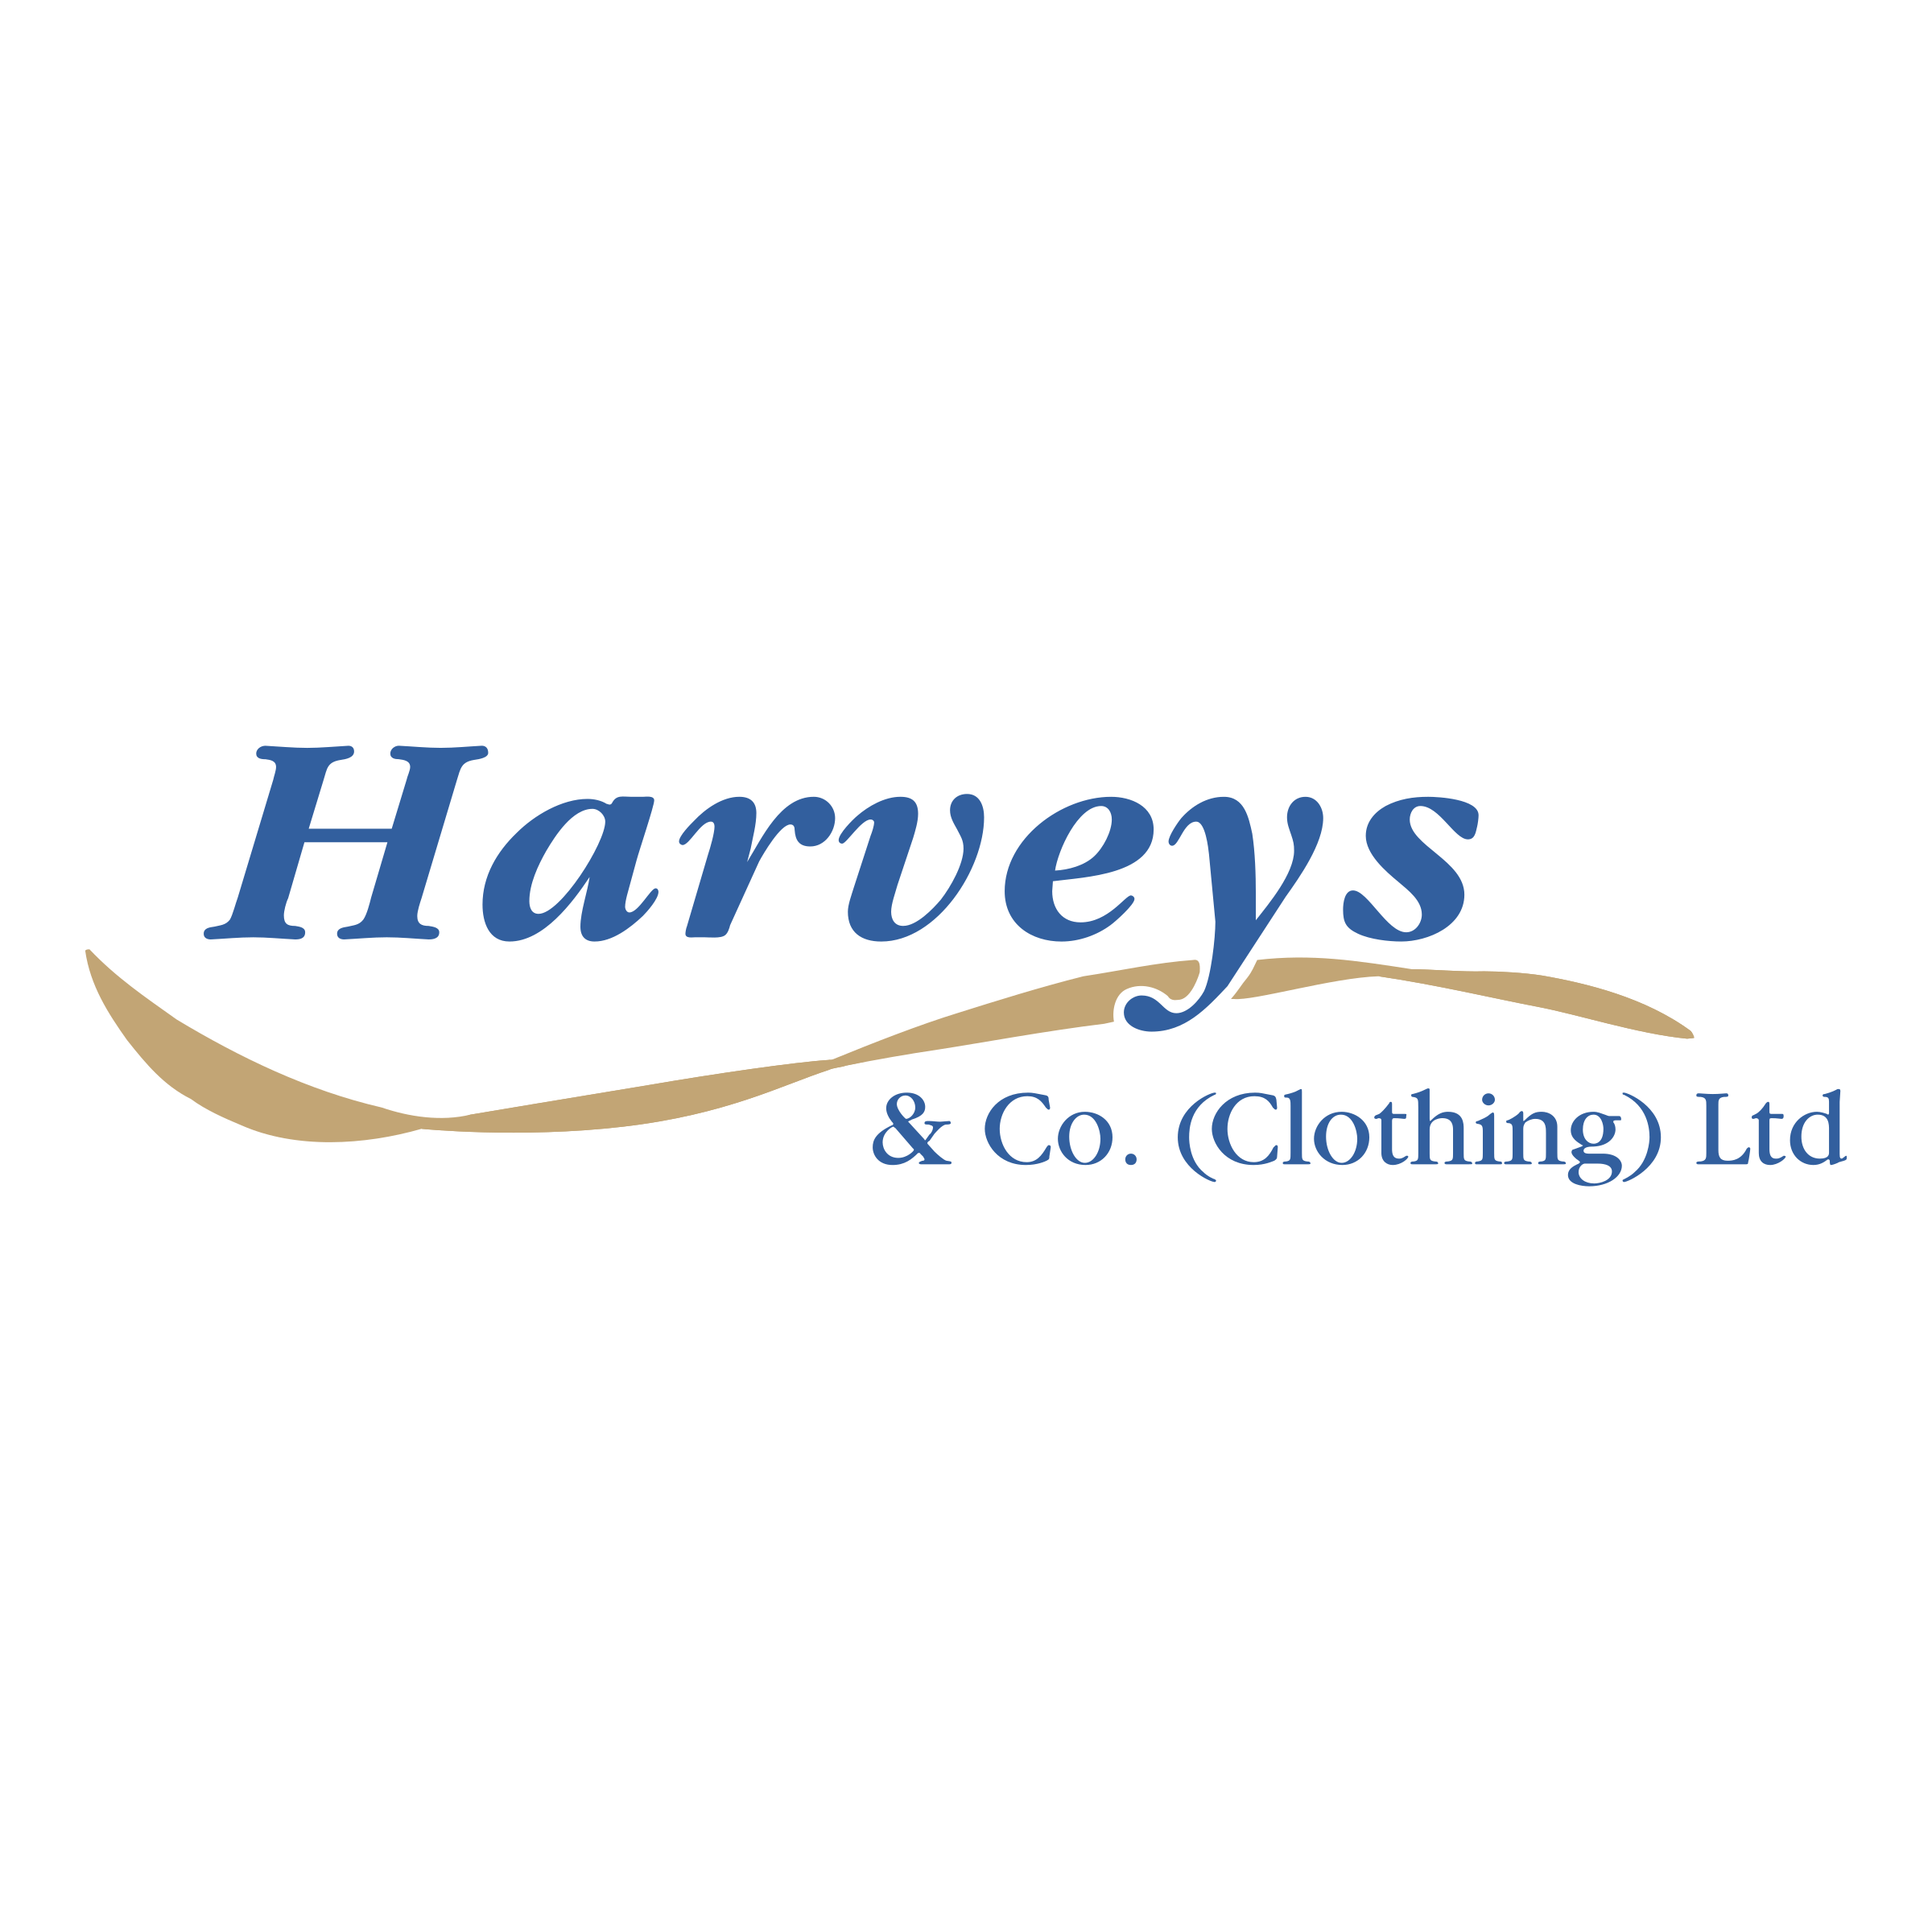 Harvey's Logo - Harvey's Logo PNG Transparent & SVG Vector